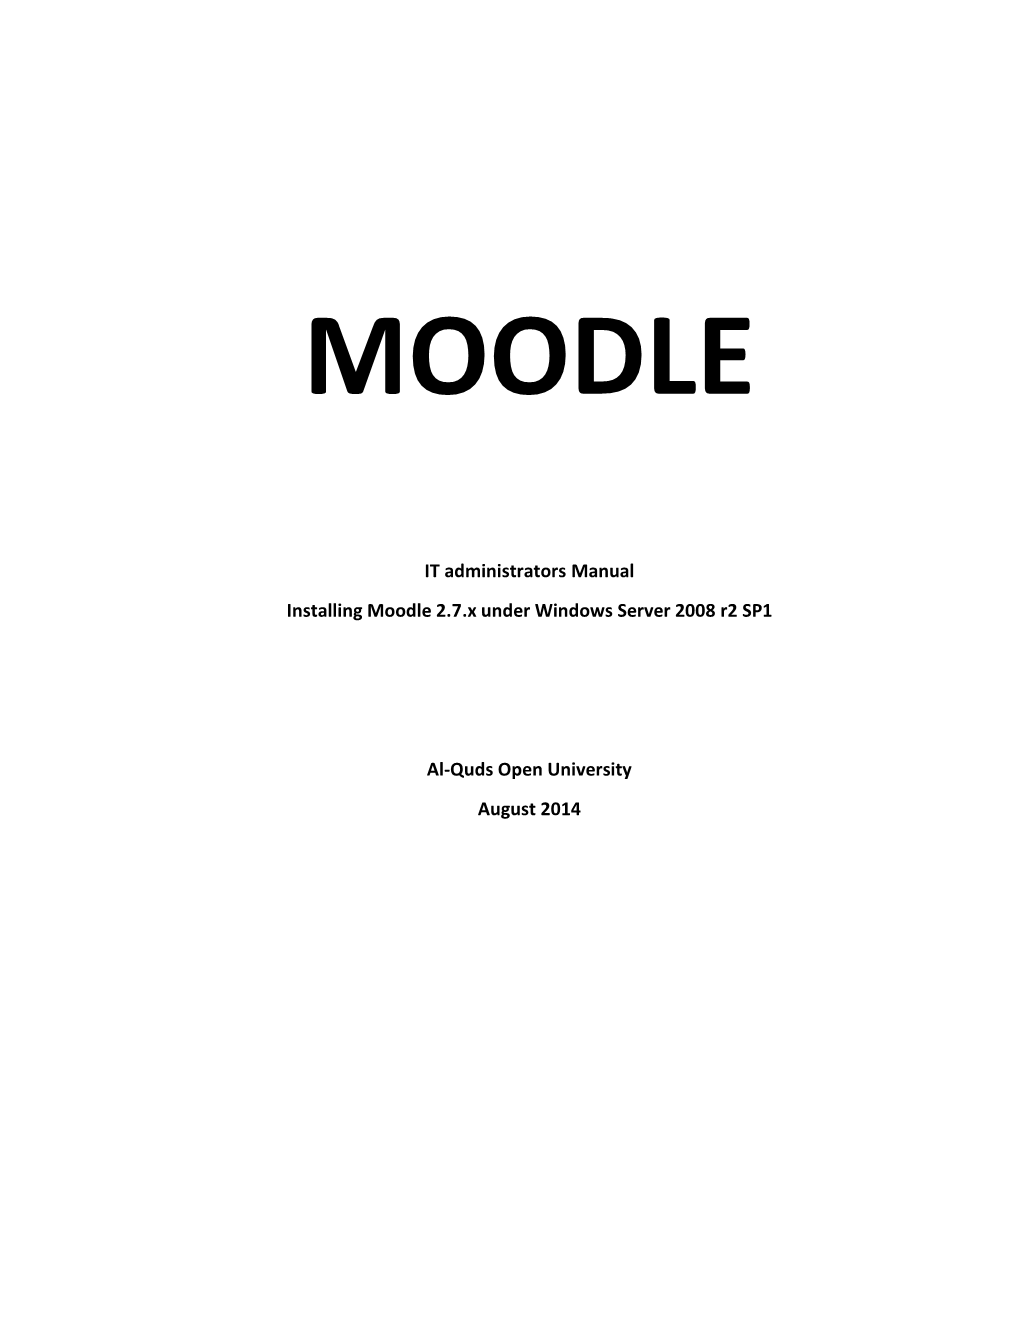 IT Administrators Manual Installing Moodle 2.7.X Under Windows Server 2008 R2 SP1